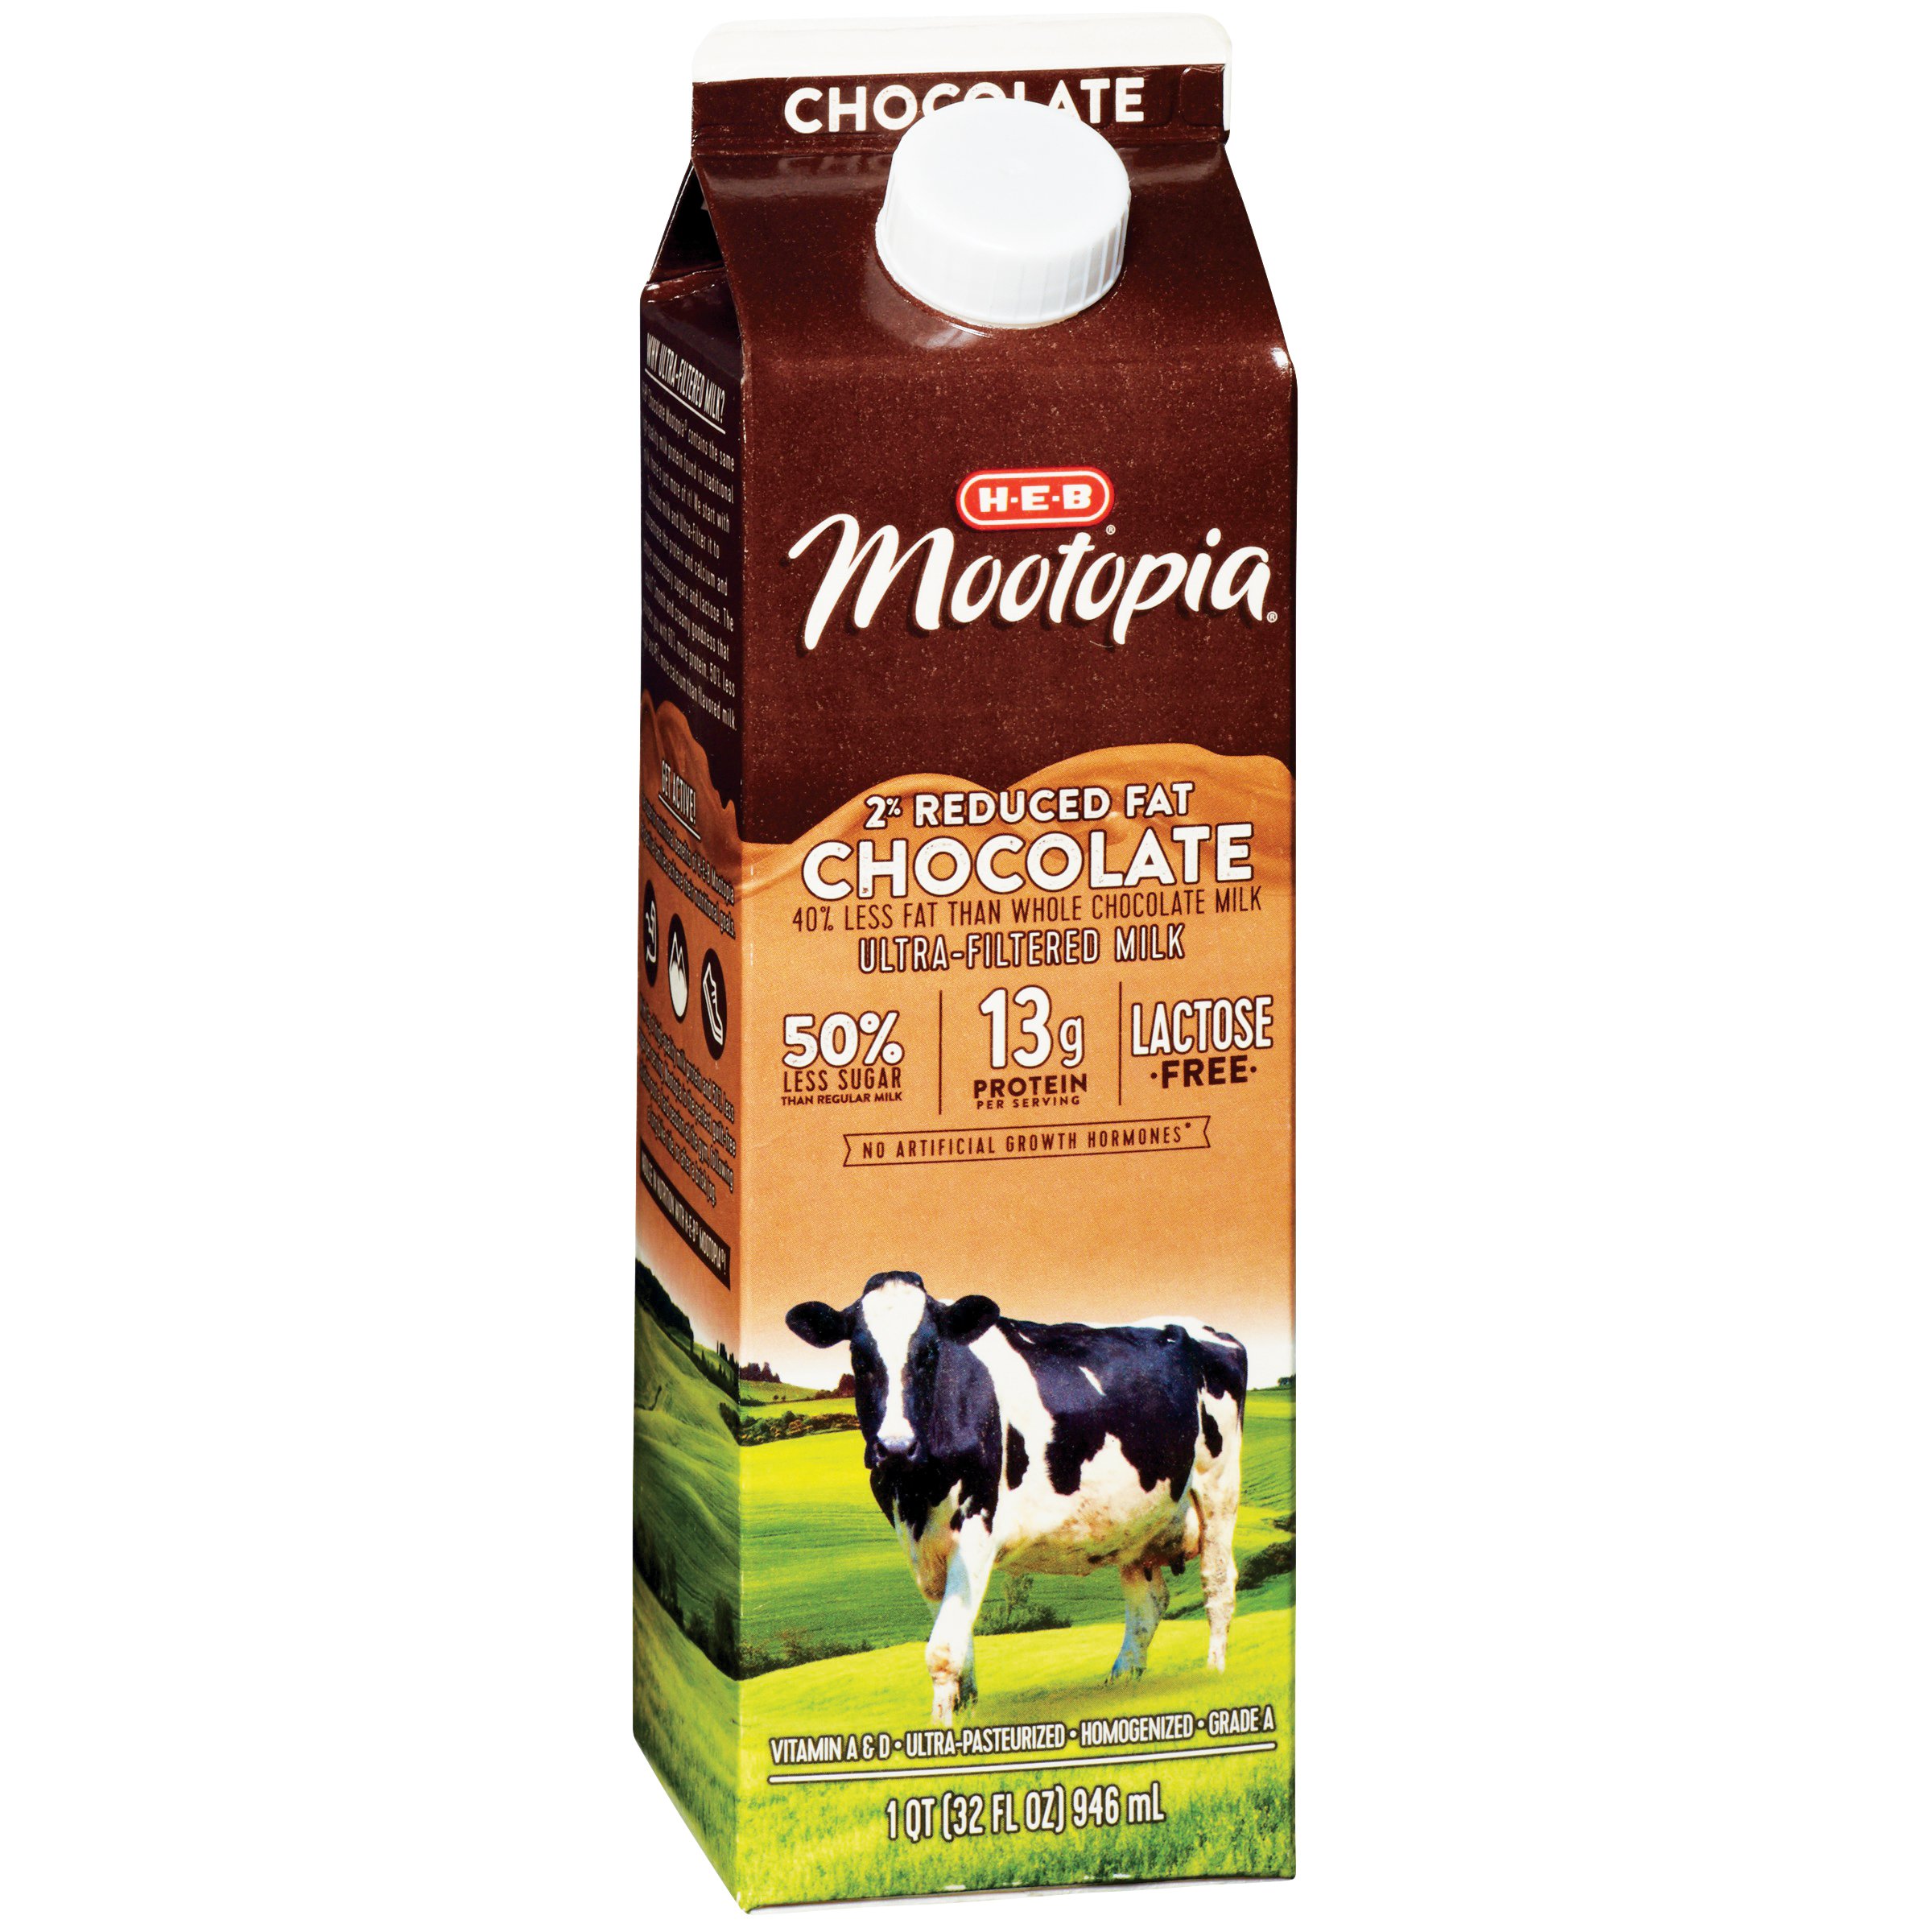 H E B Mootopia Lactose Free Chocolate Reduced Fat Milk Shop Milk